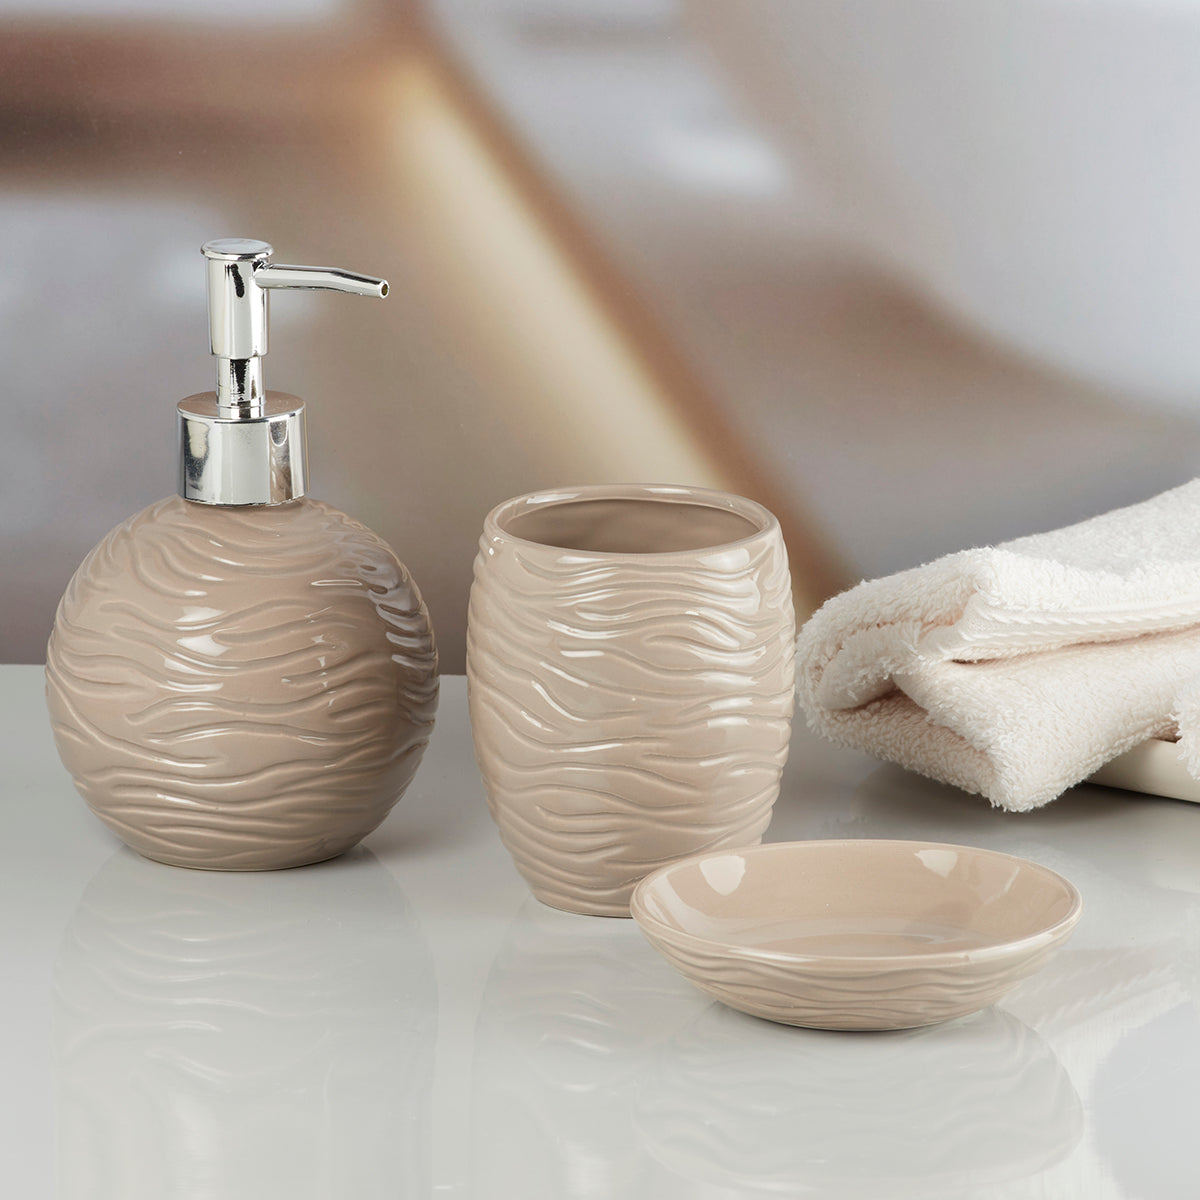 Ceramic Bathroom Accessories Set of 3 Bath Set with Soap Dispenser (8338)